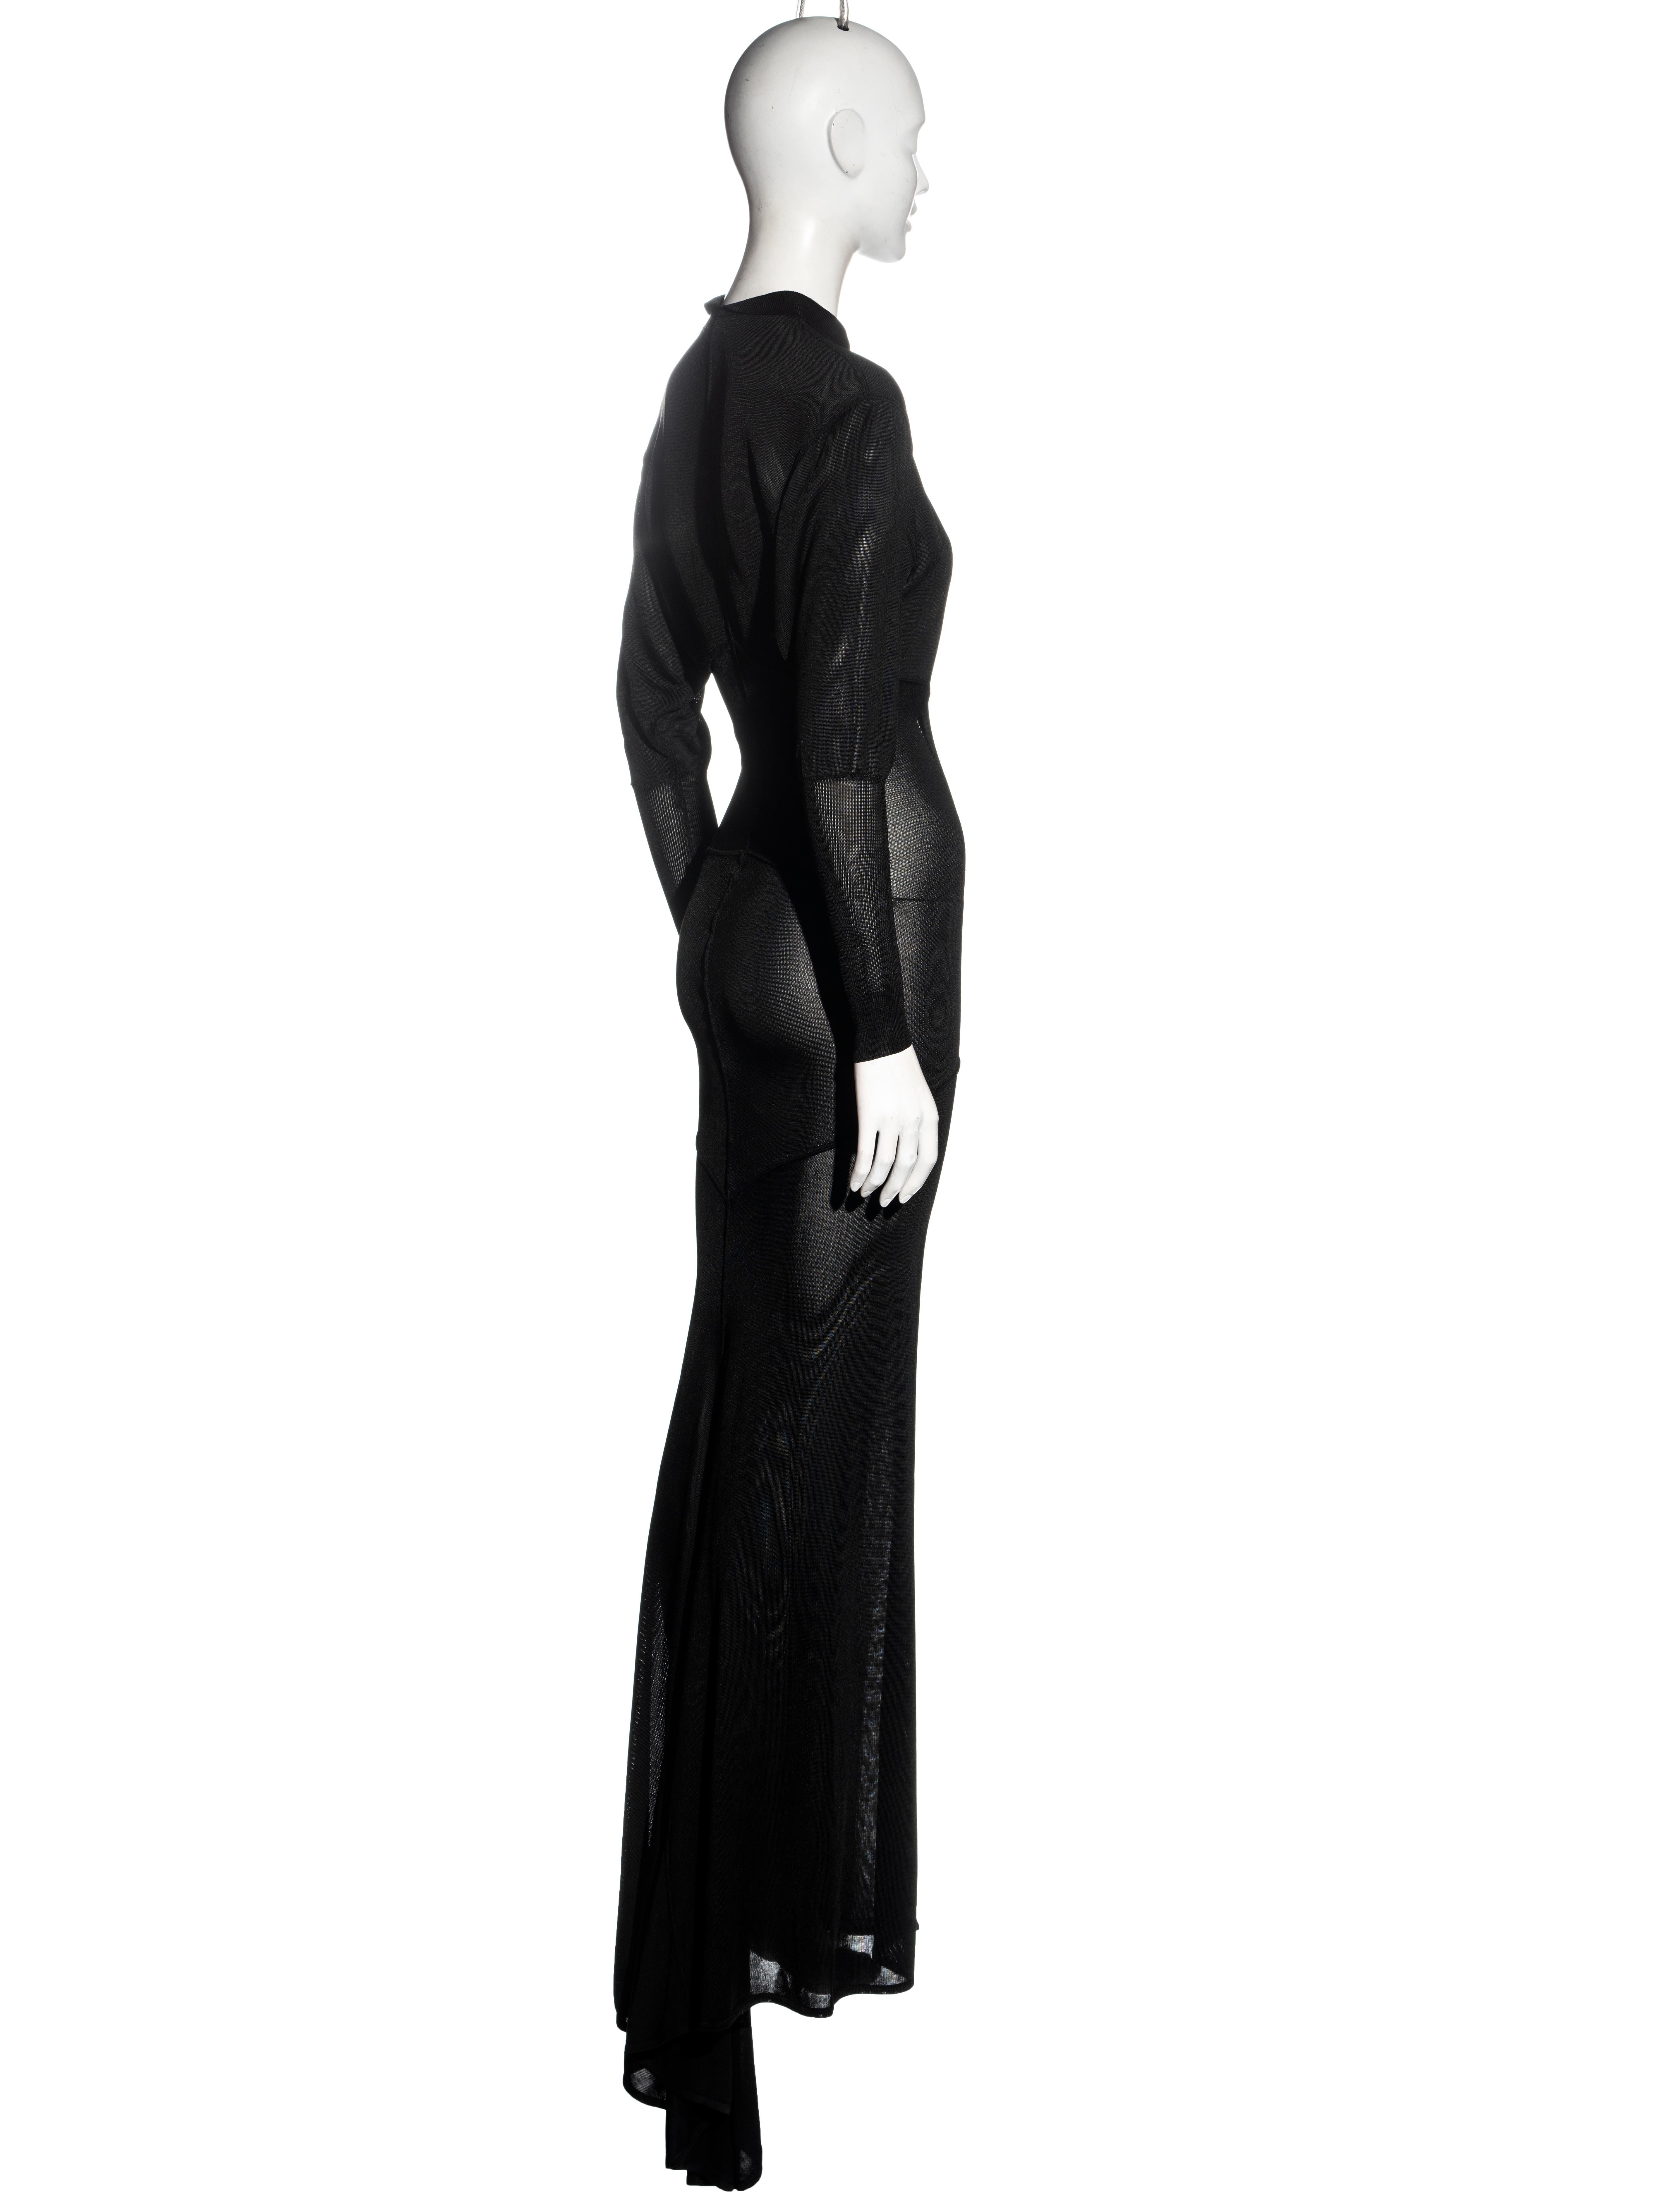 Women's Azzedine Alaia black acetate knit evening dress with train, fw 1986 For Sale